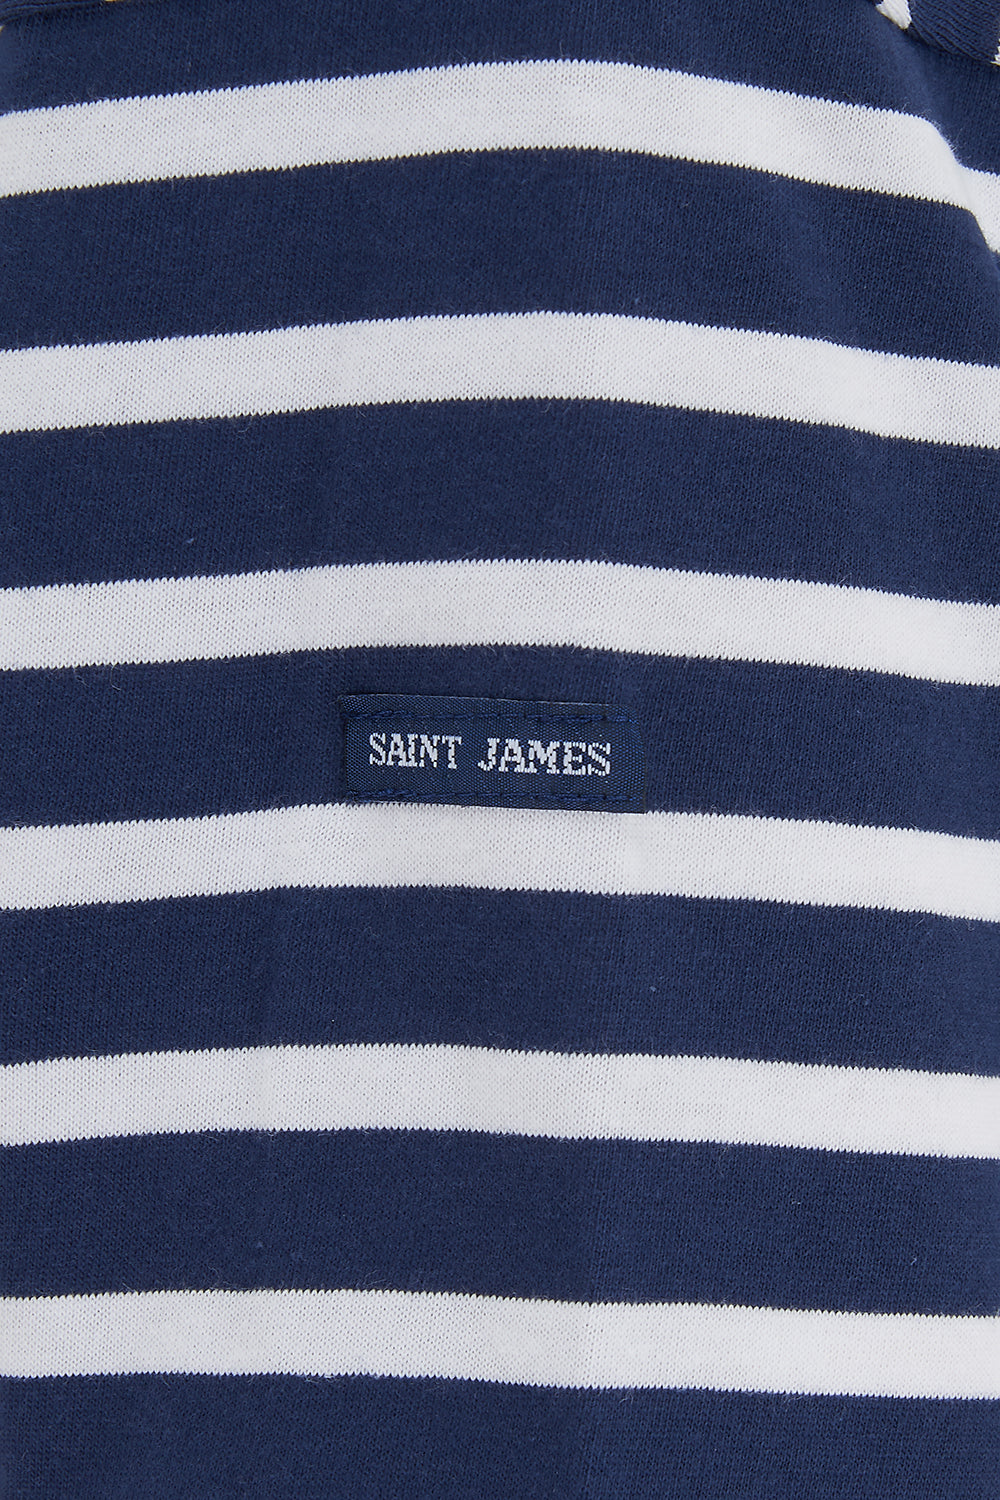 Saint James Minquiers Women’s 2-tone Stripe Top Navy/White - Close Up Logo